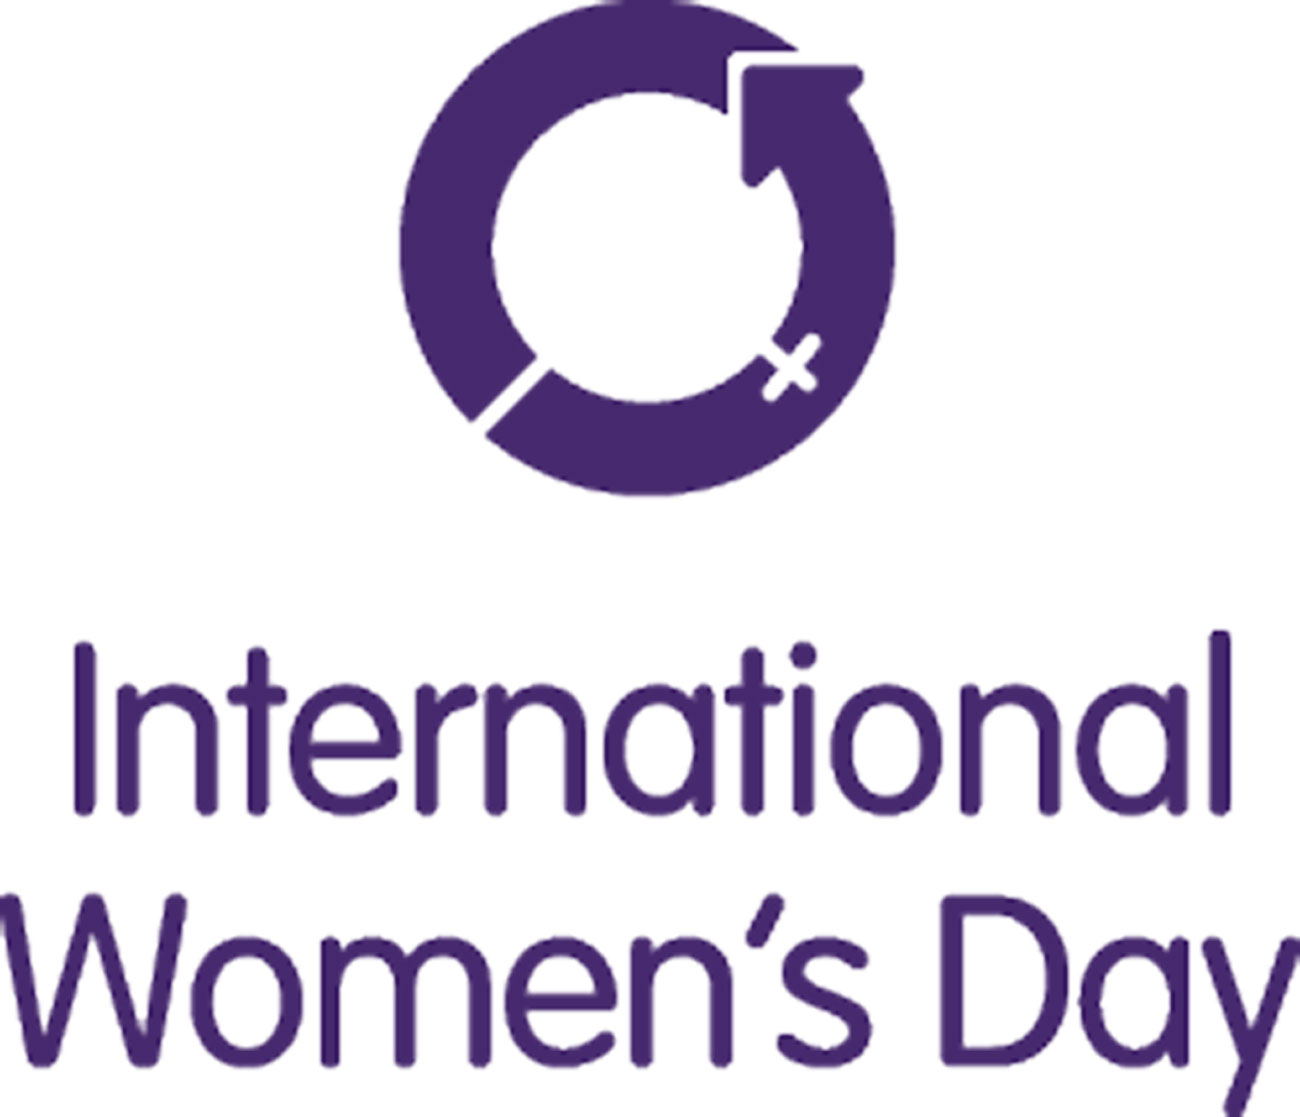 Celebrating International Women's Day on